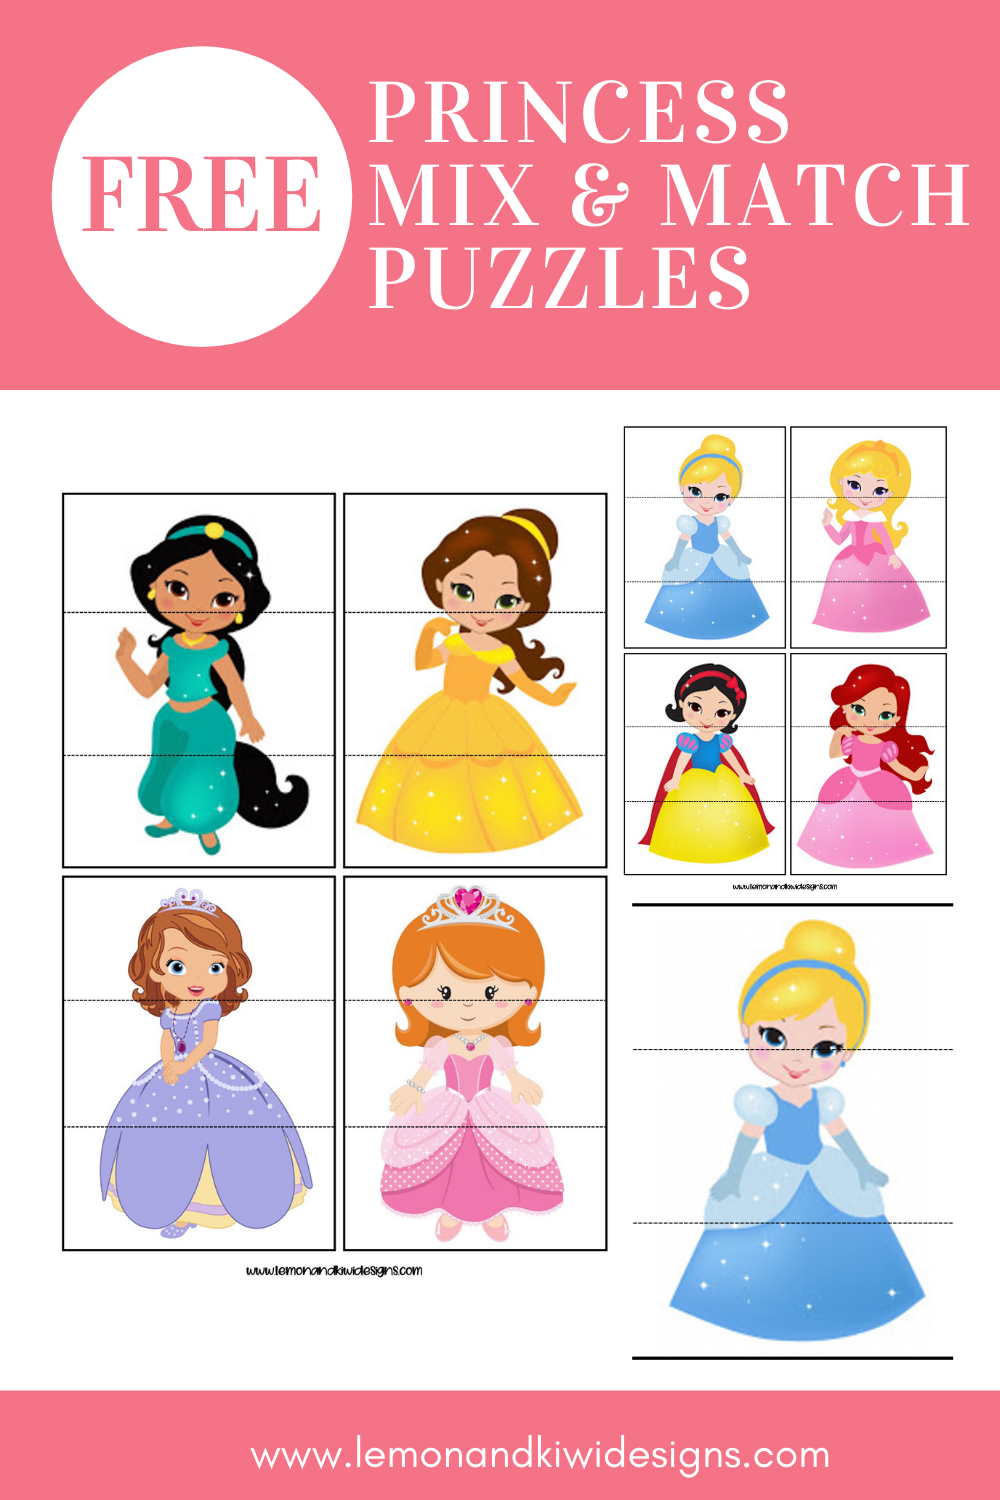 Free Printable Princess Mix and Match Puzzles